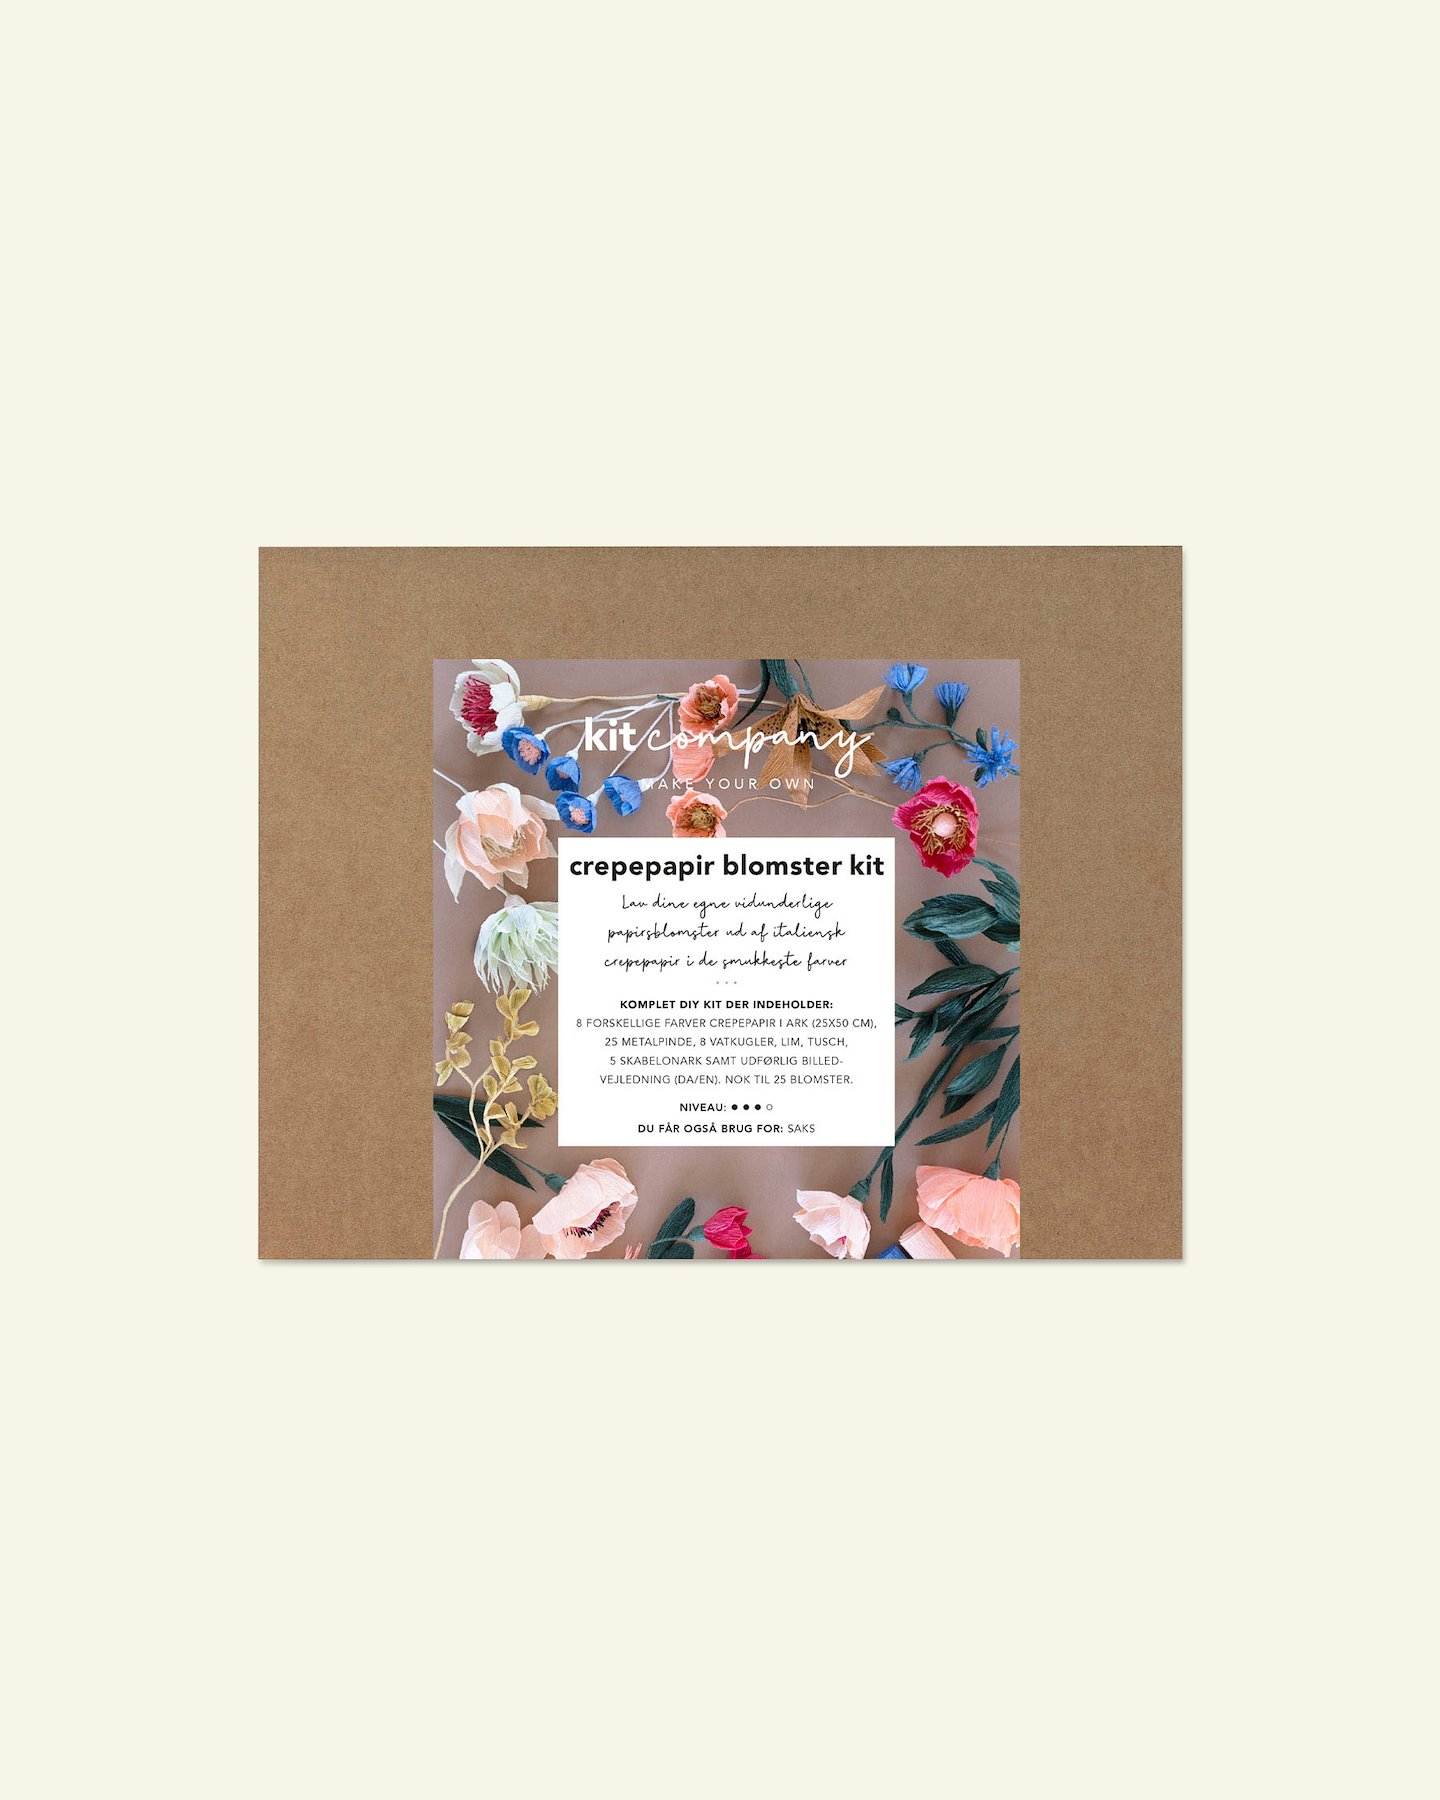 Kit Company Crepepapir blomster DIY kit 93807_pack